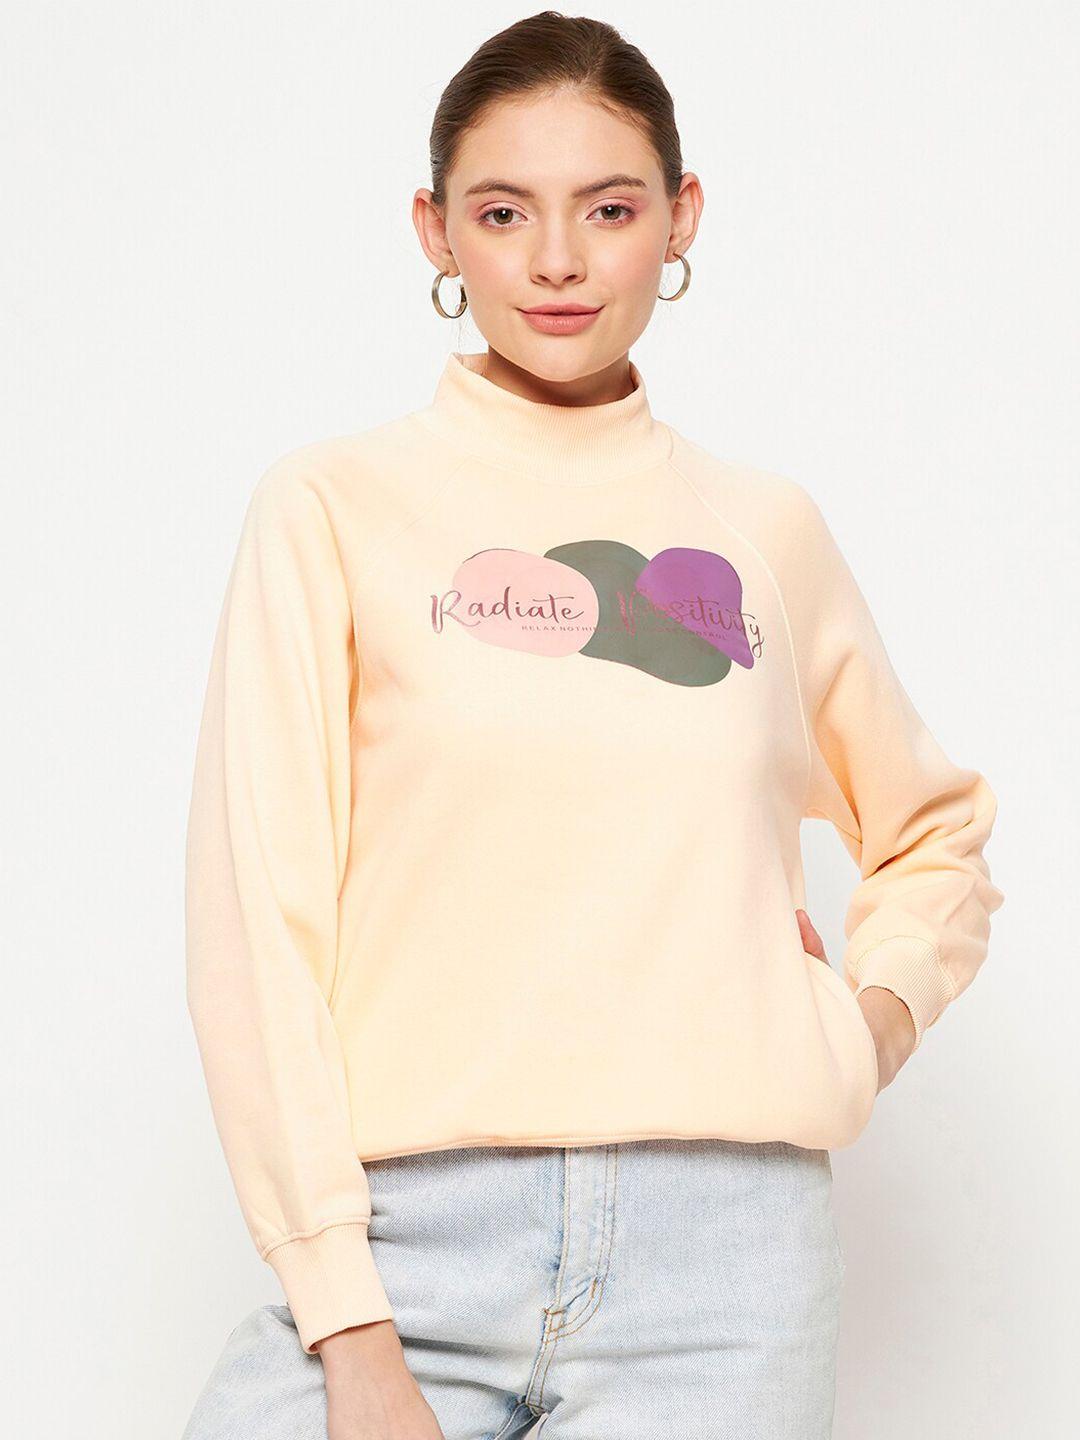 madame-graphic-printed-cotton-pullover-sweatshirt